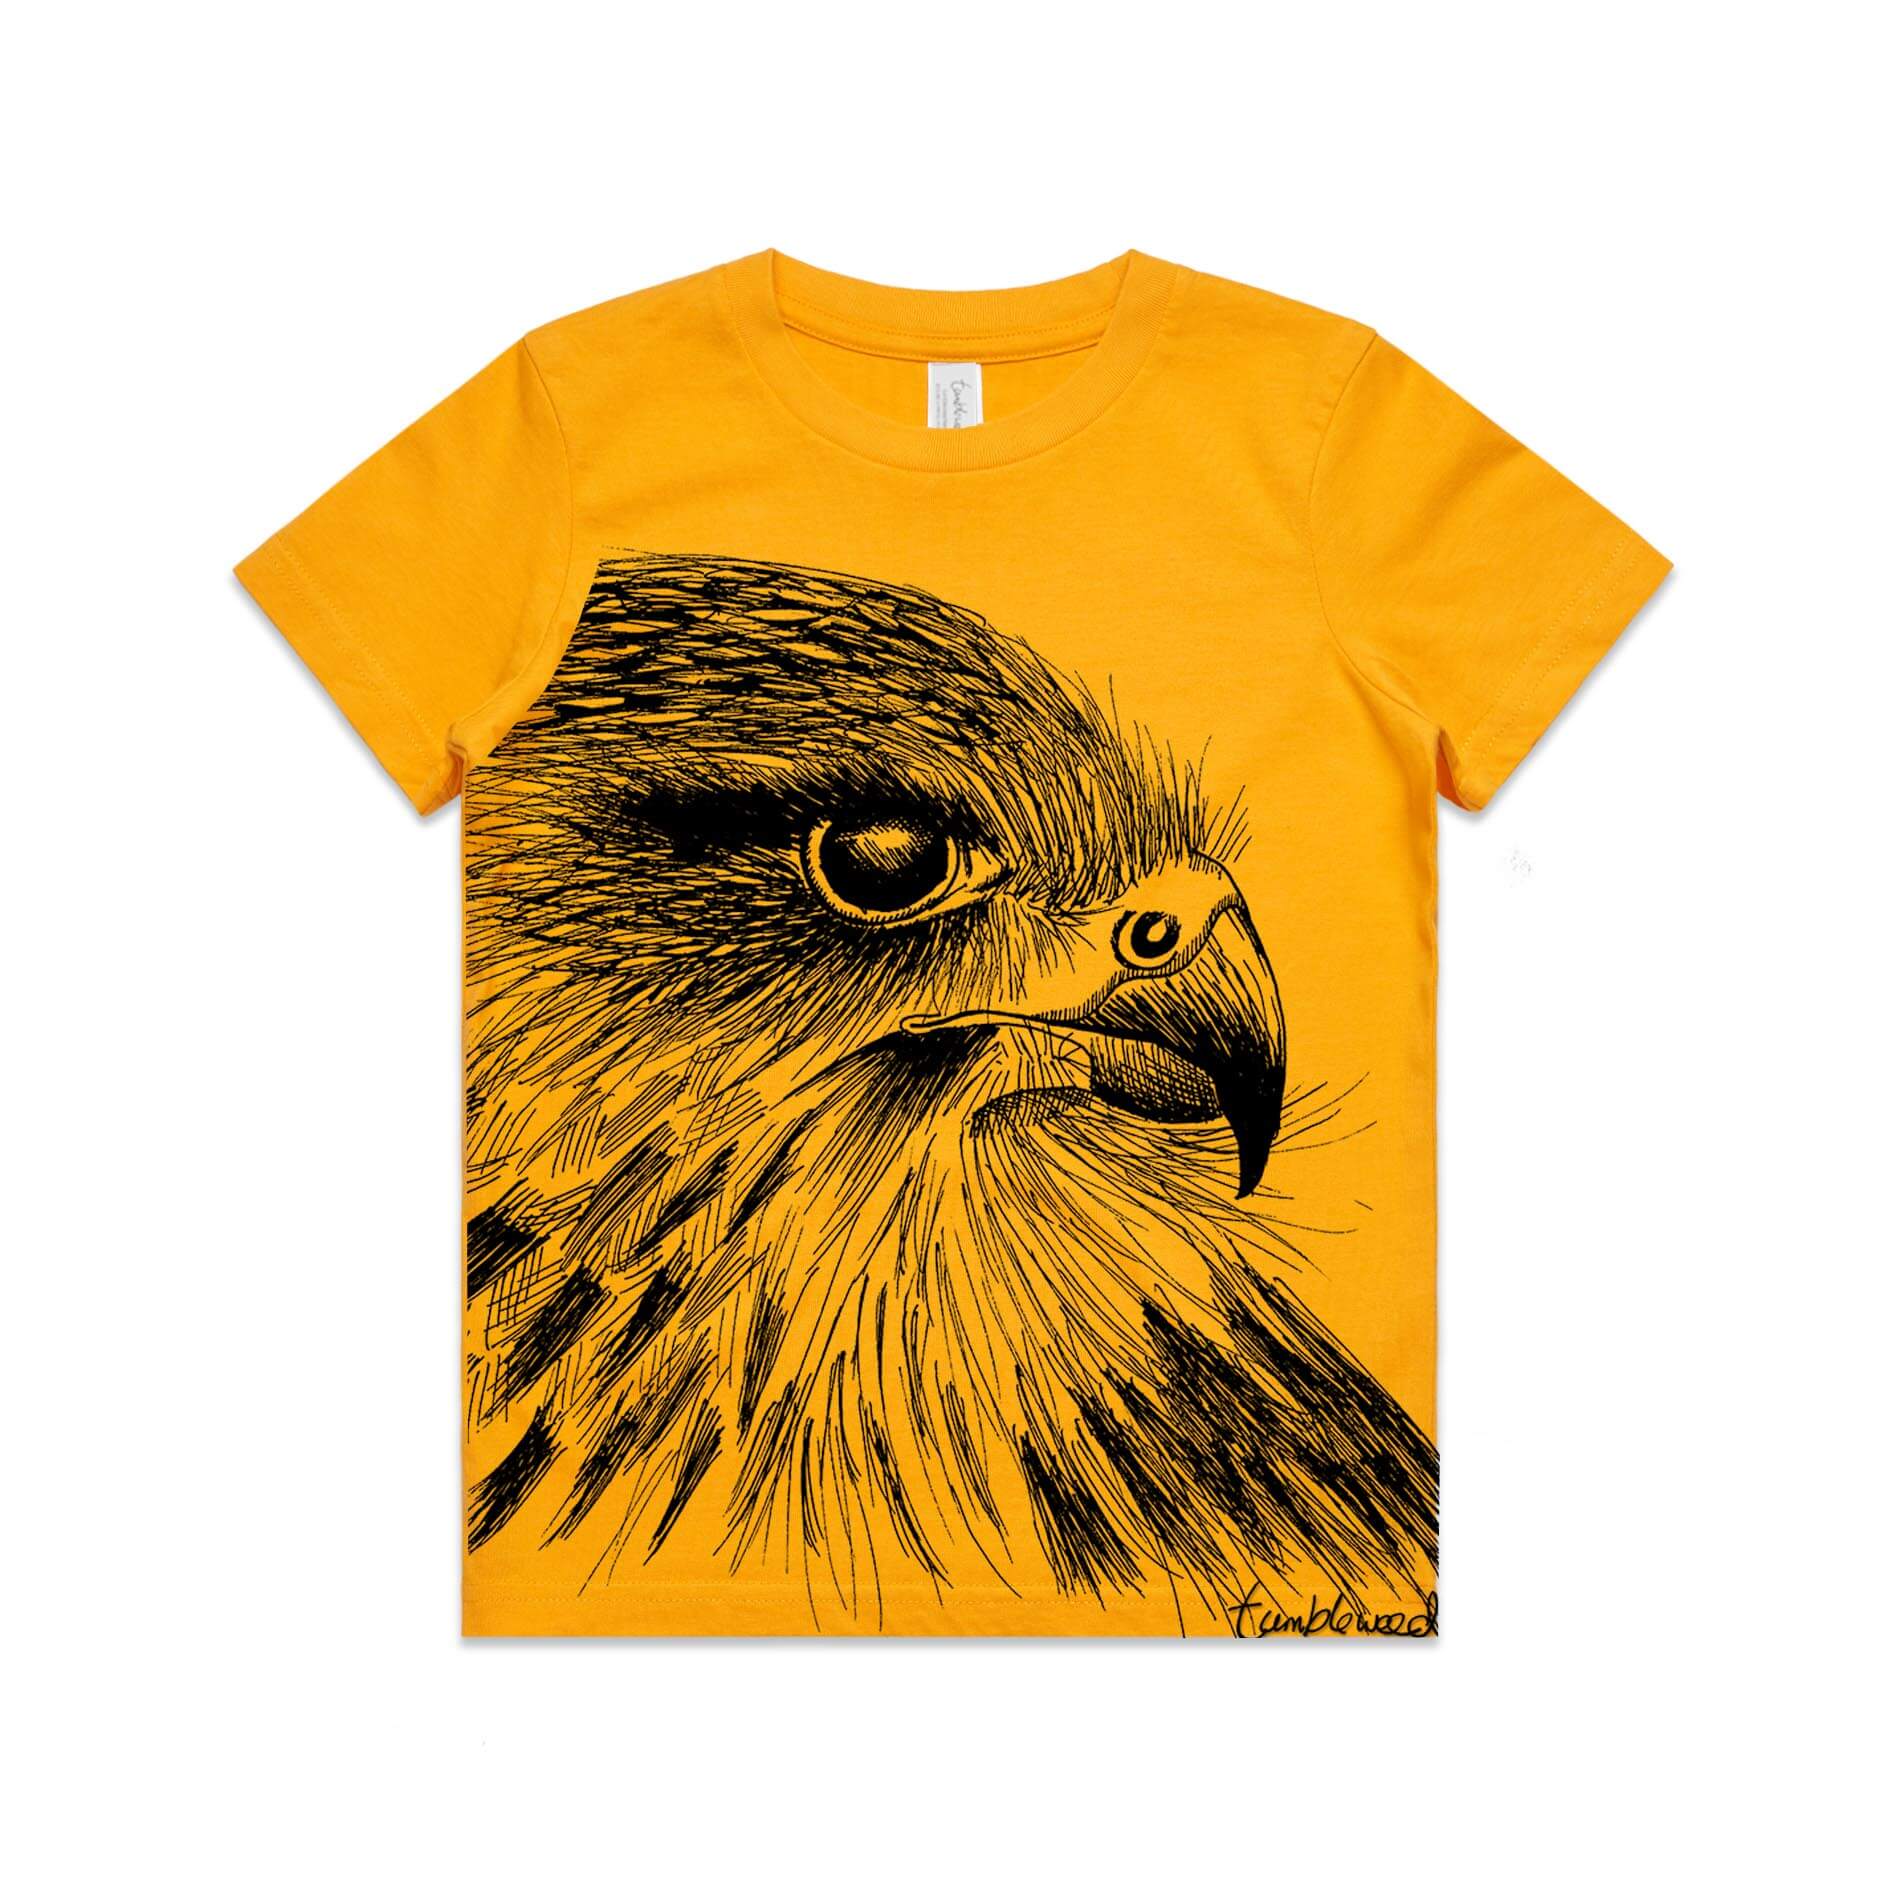 Gold, cotton kids' t-shirt with screen printed Kids Karearea/NZ Falcon design.